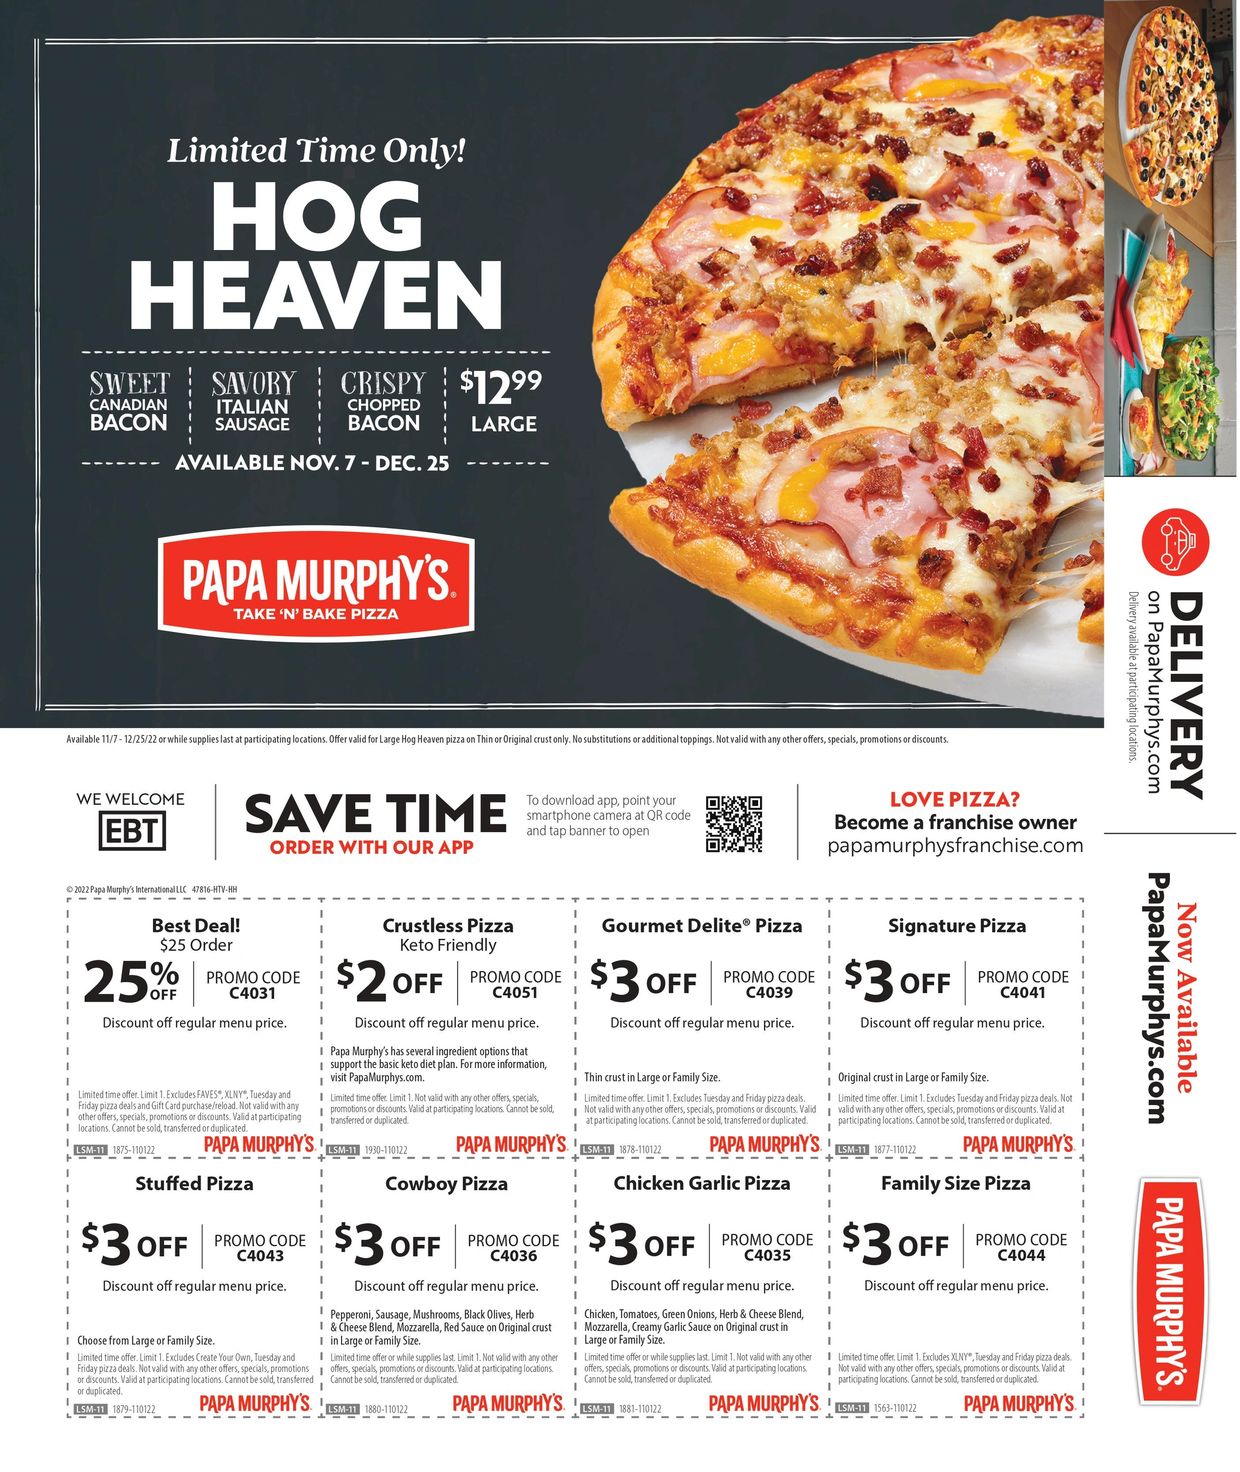 Hog Heaven $12.99 Large Available November 7 to December 25.